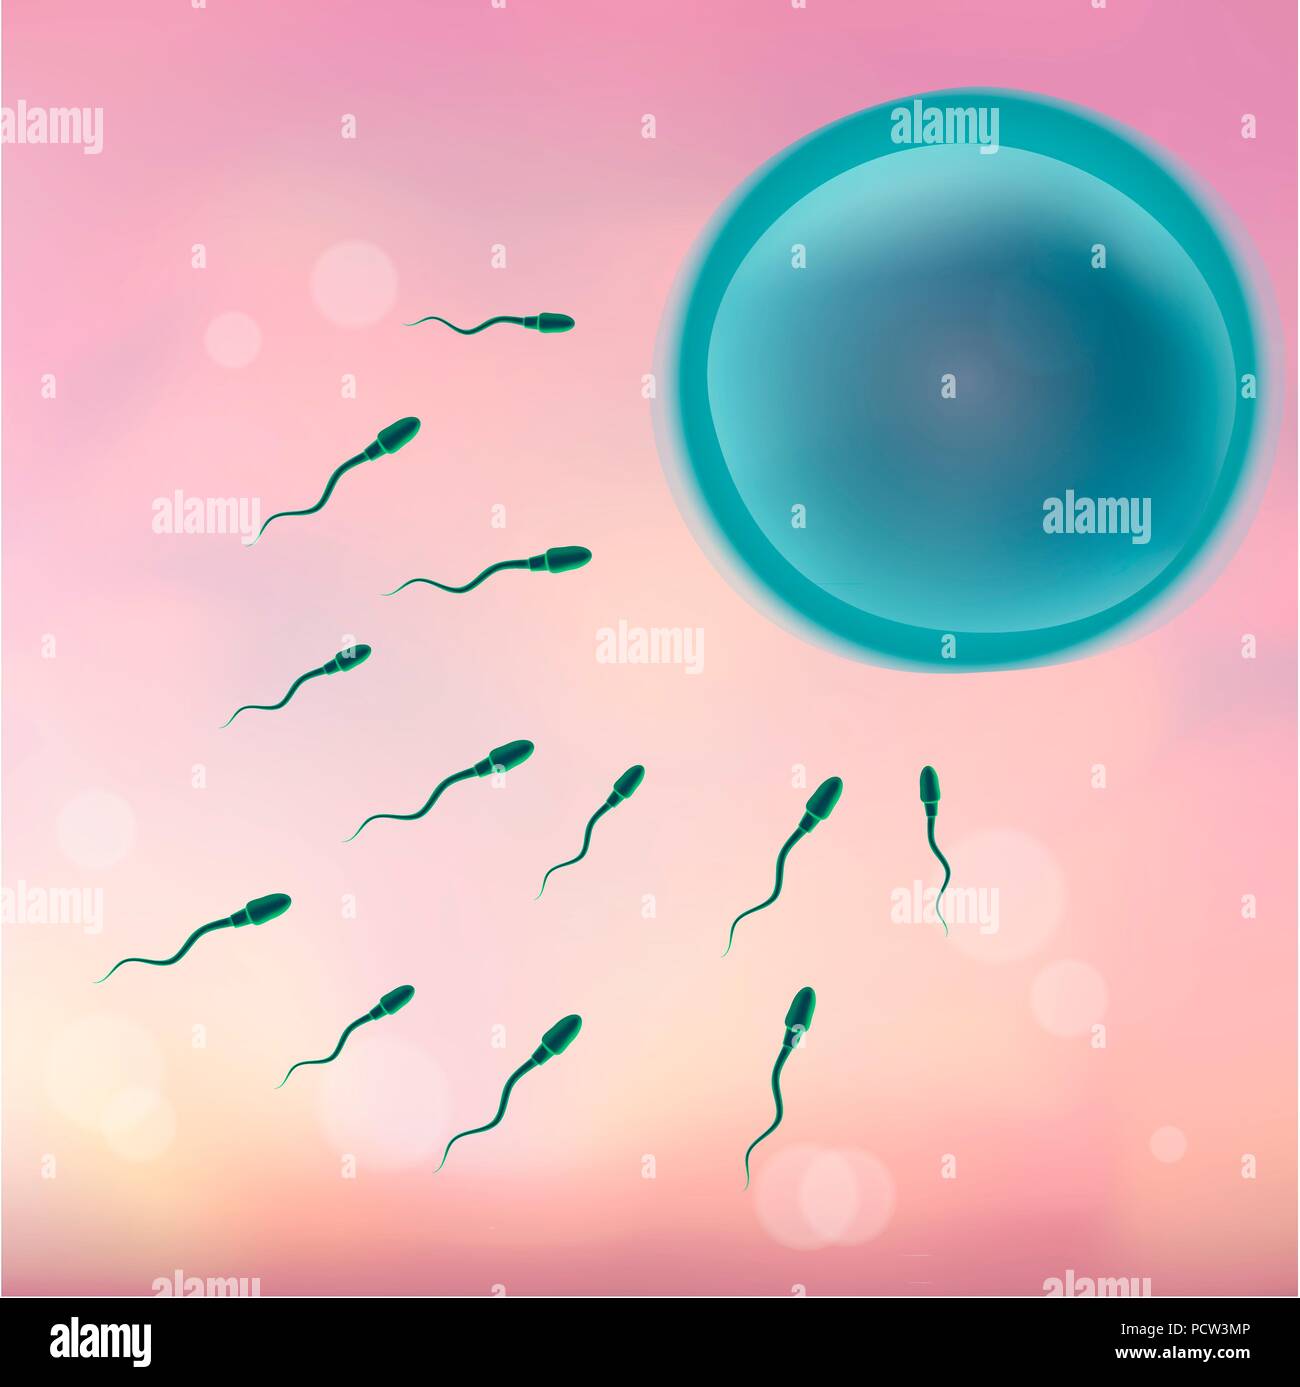 Human sperm and egg, illustration. Stock Photo